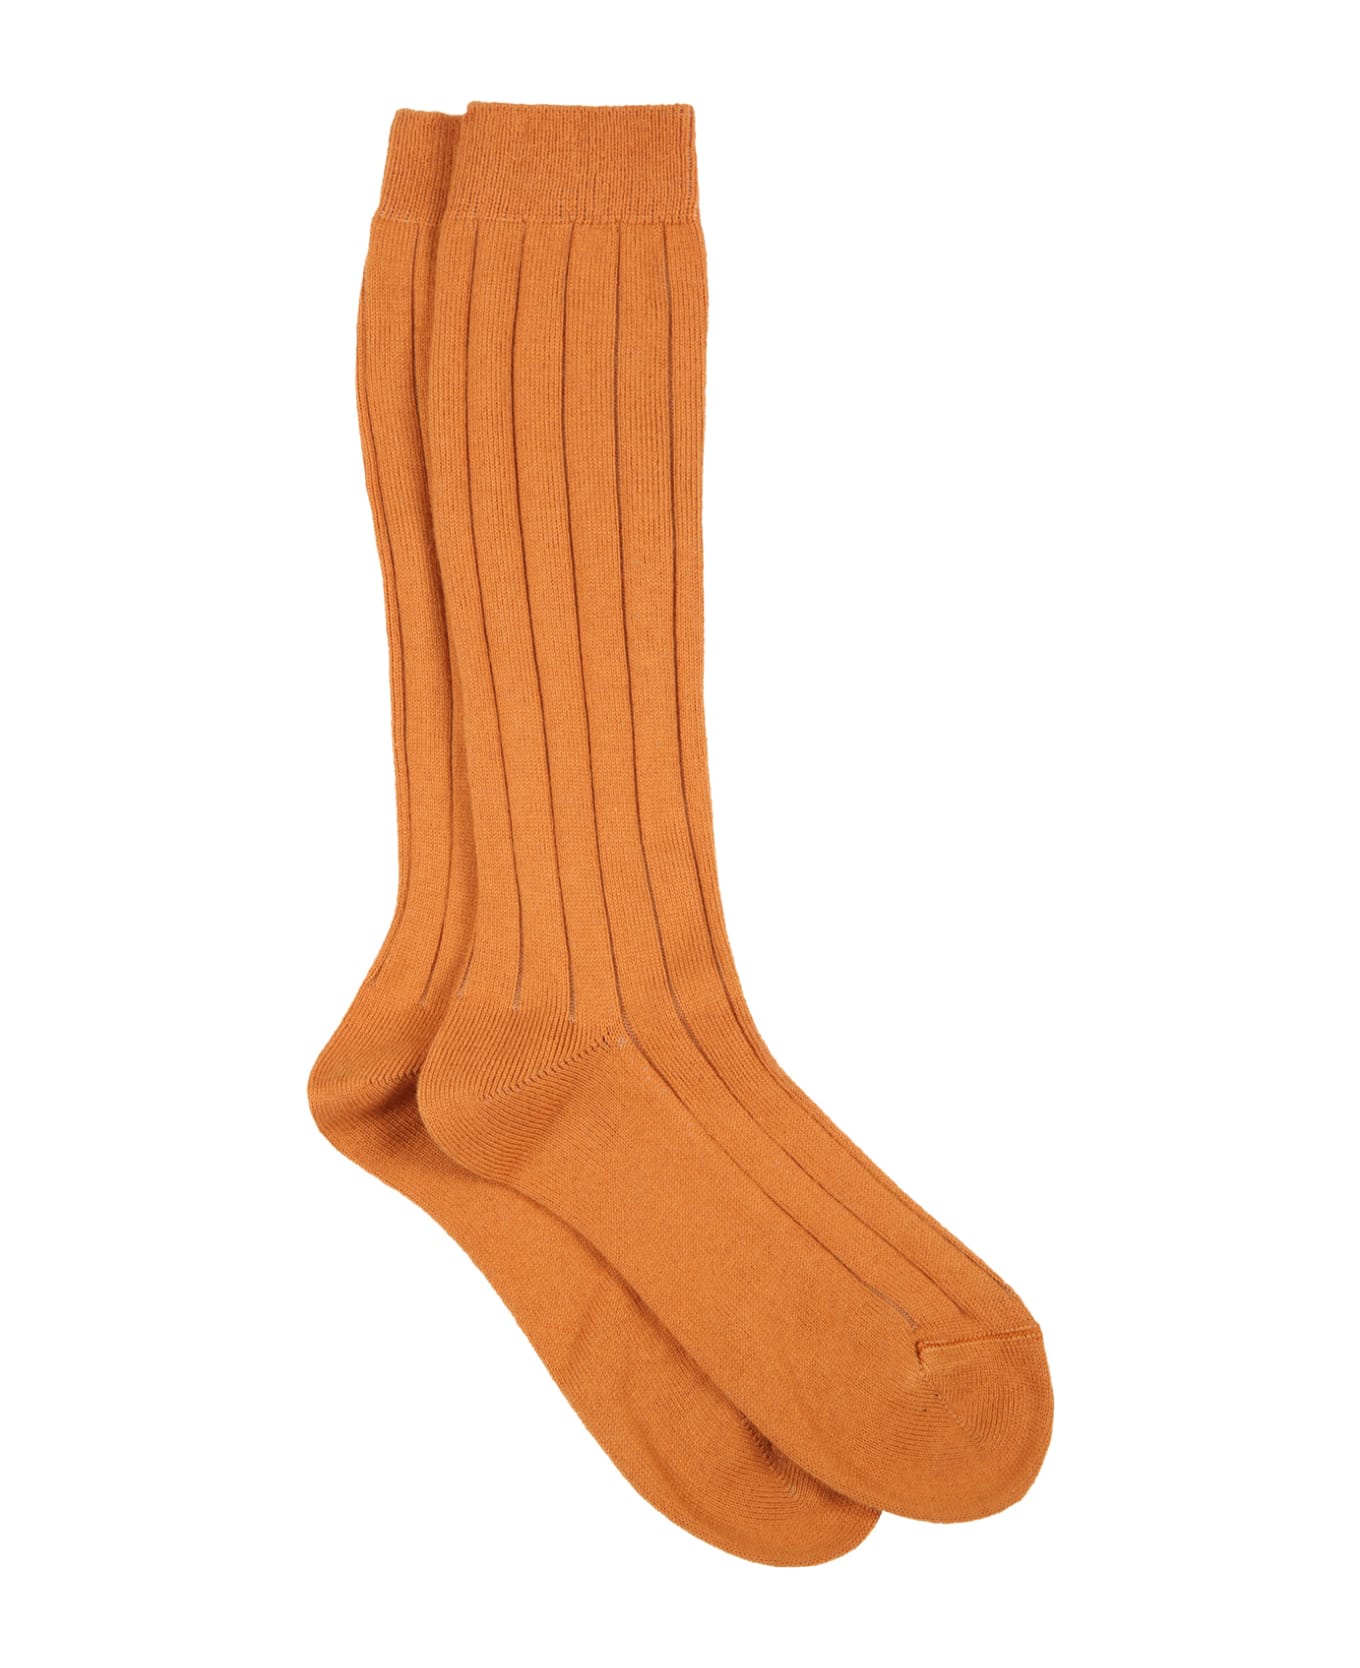 Story Loris Orange Socks For Kids - Orange